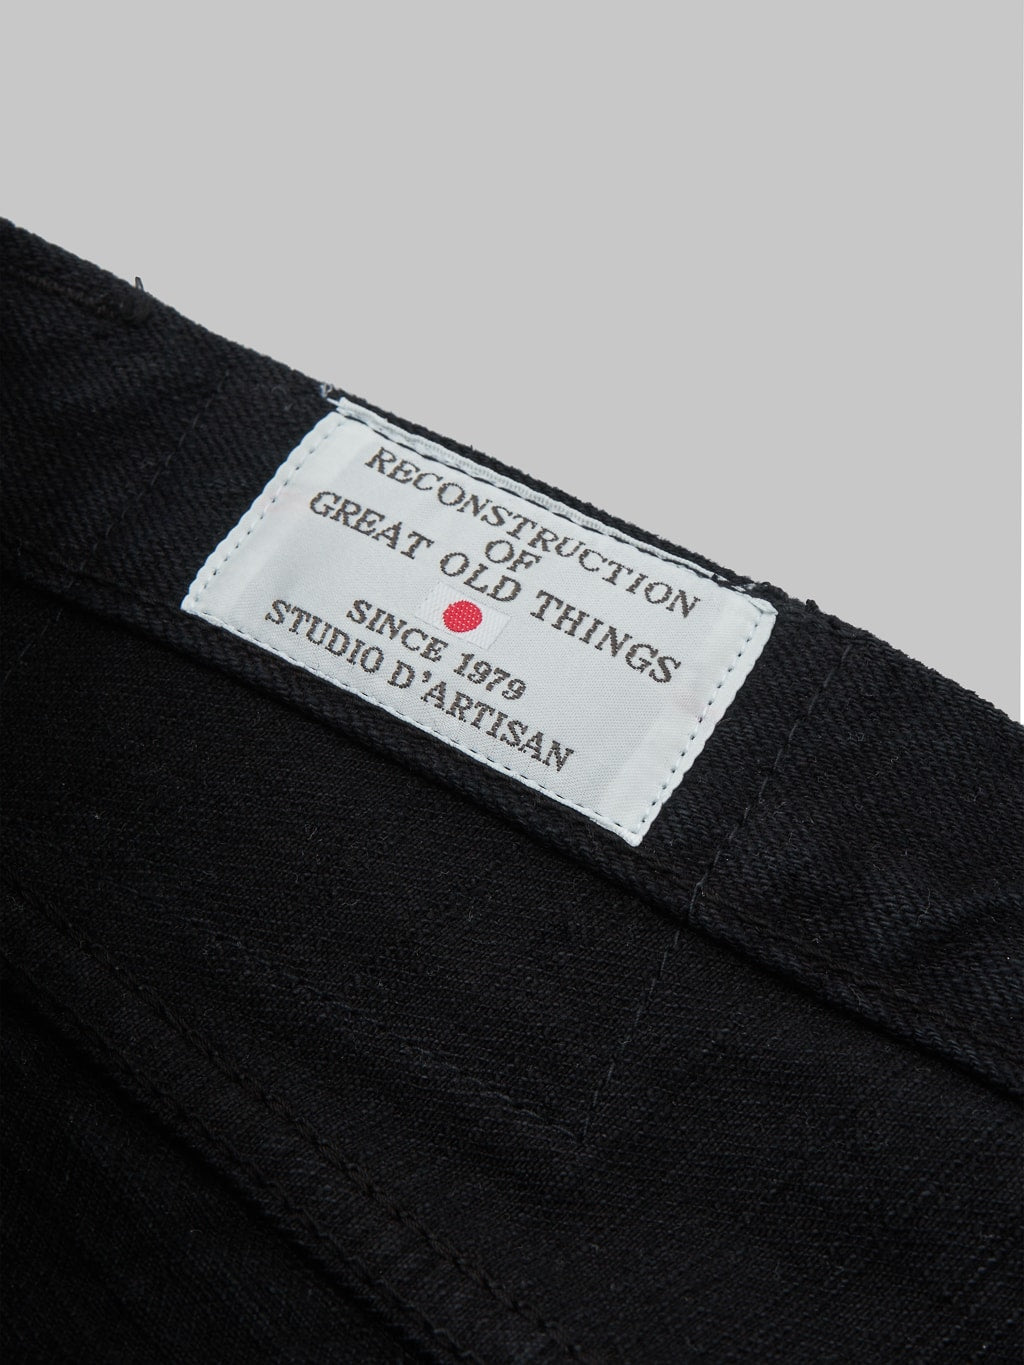 Studio DArtisan Kurozome Black 14oz Selvedge Jeans Relaxed Tapered interior tag